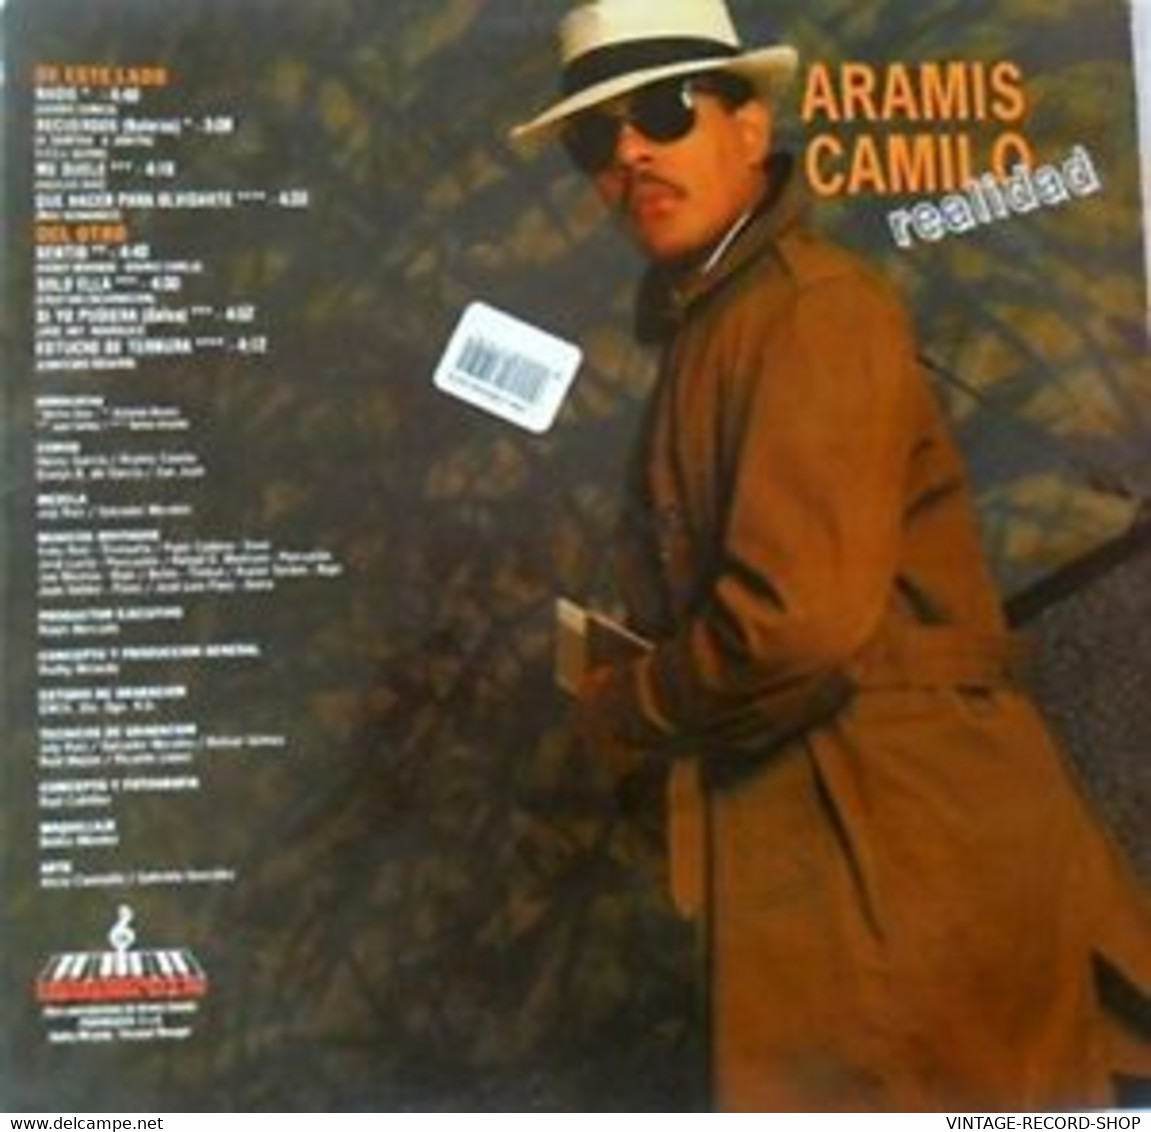 ARAMIS CAMILO*REALIDAD* RMM-SONOLUX LP 1992 SALSA BOLERO MERENGUE - Sonstige - Spanische Musik